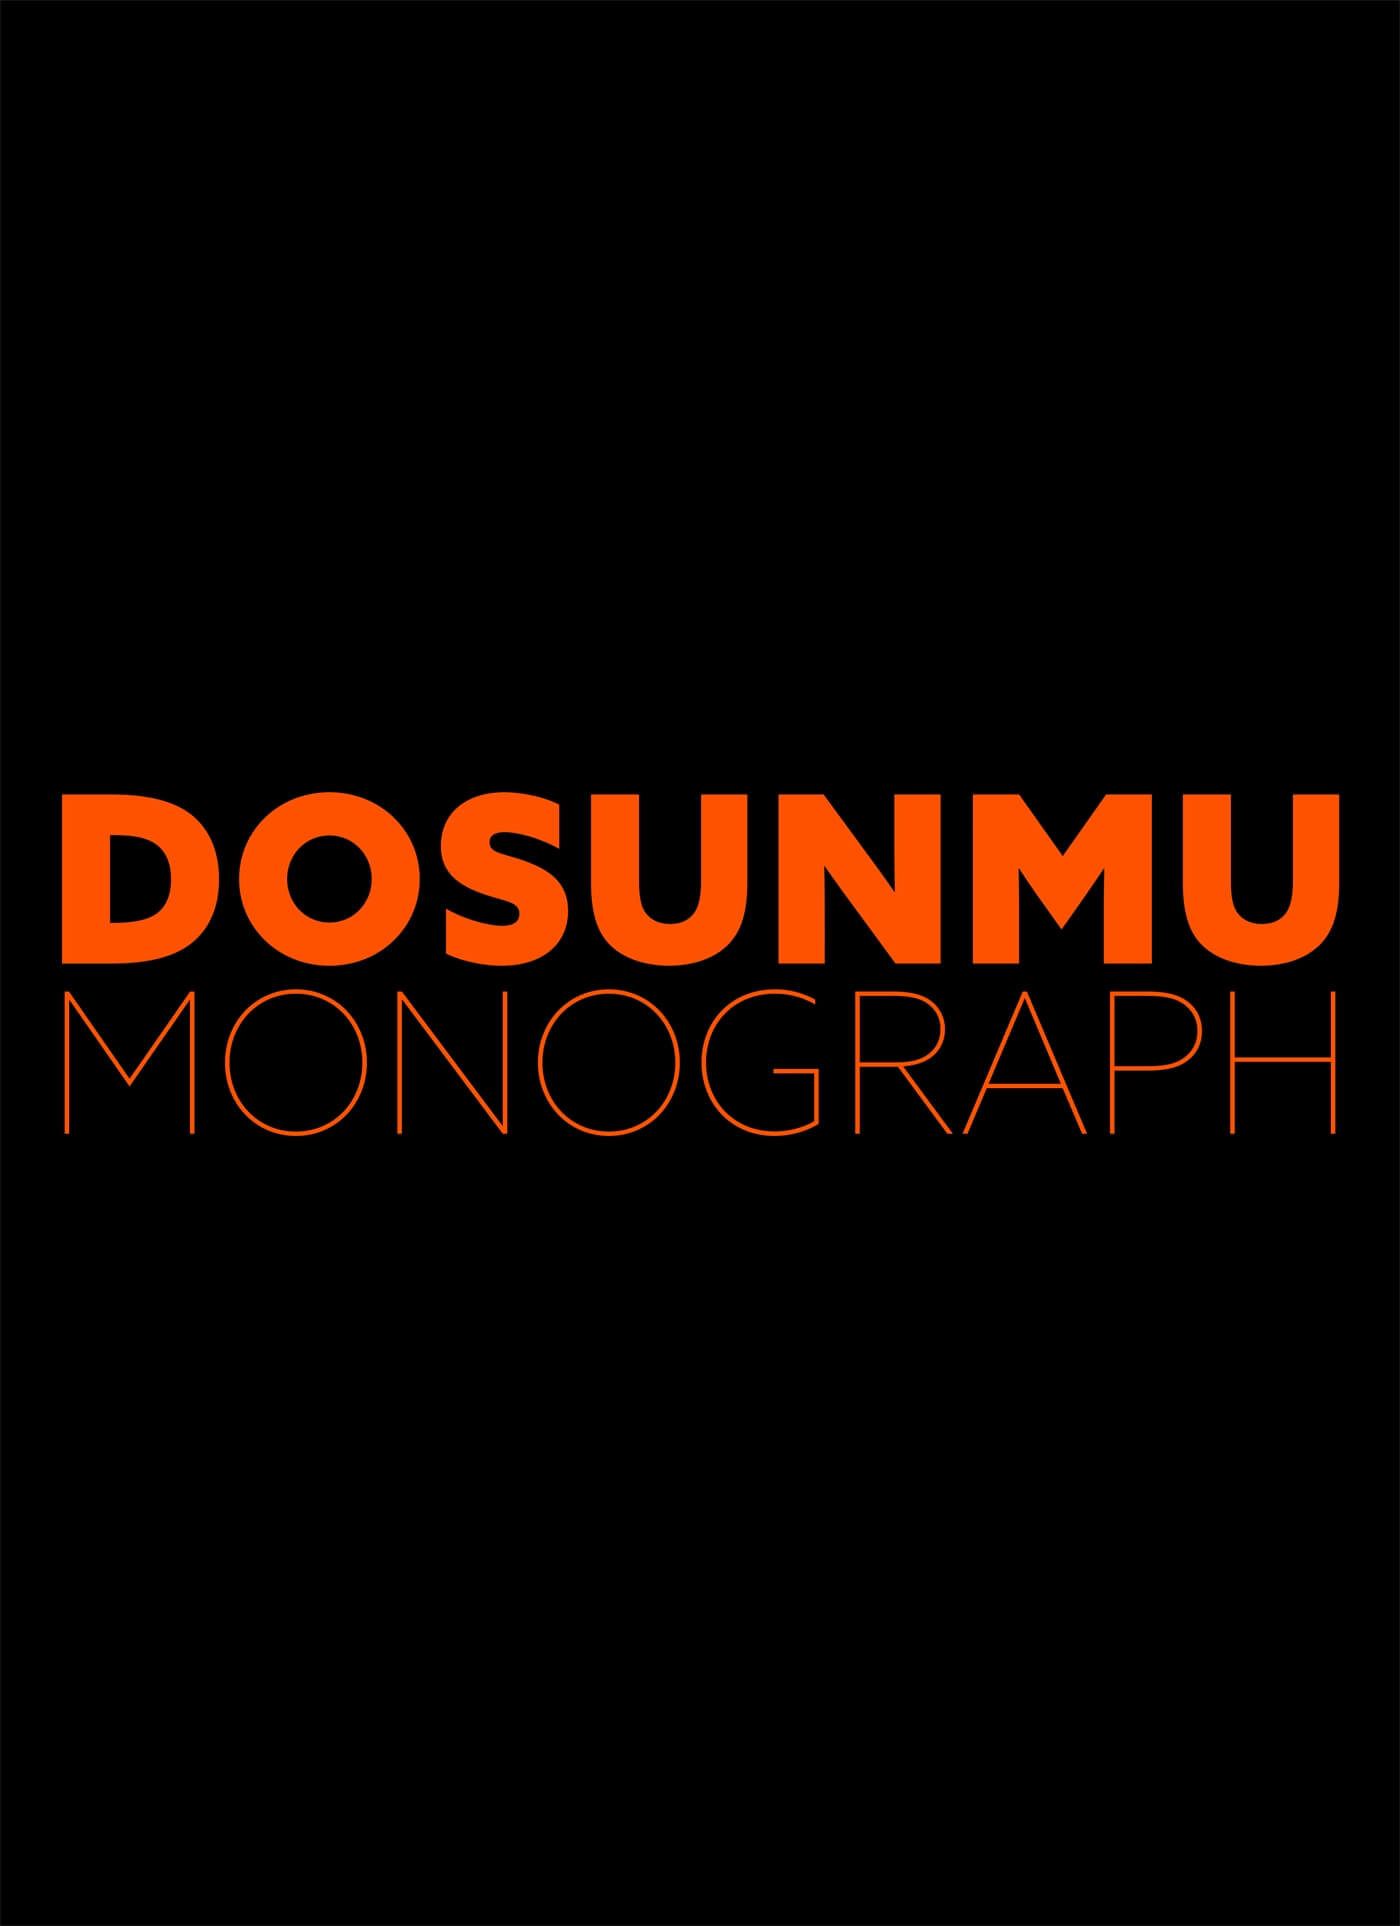 Black book cover with title displayed in orange, bold, upper case, sans serif font